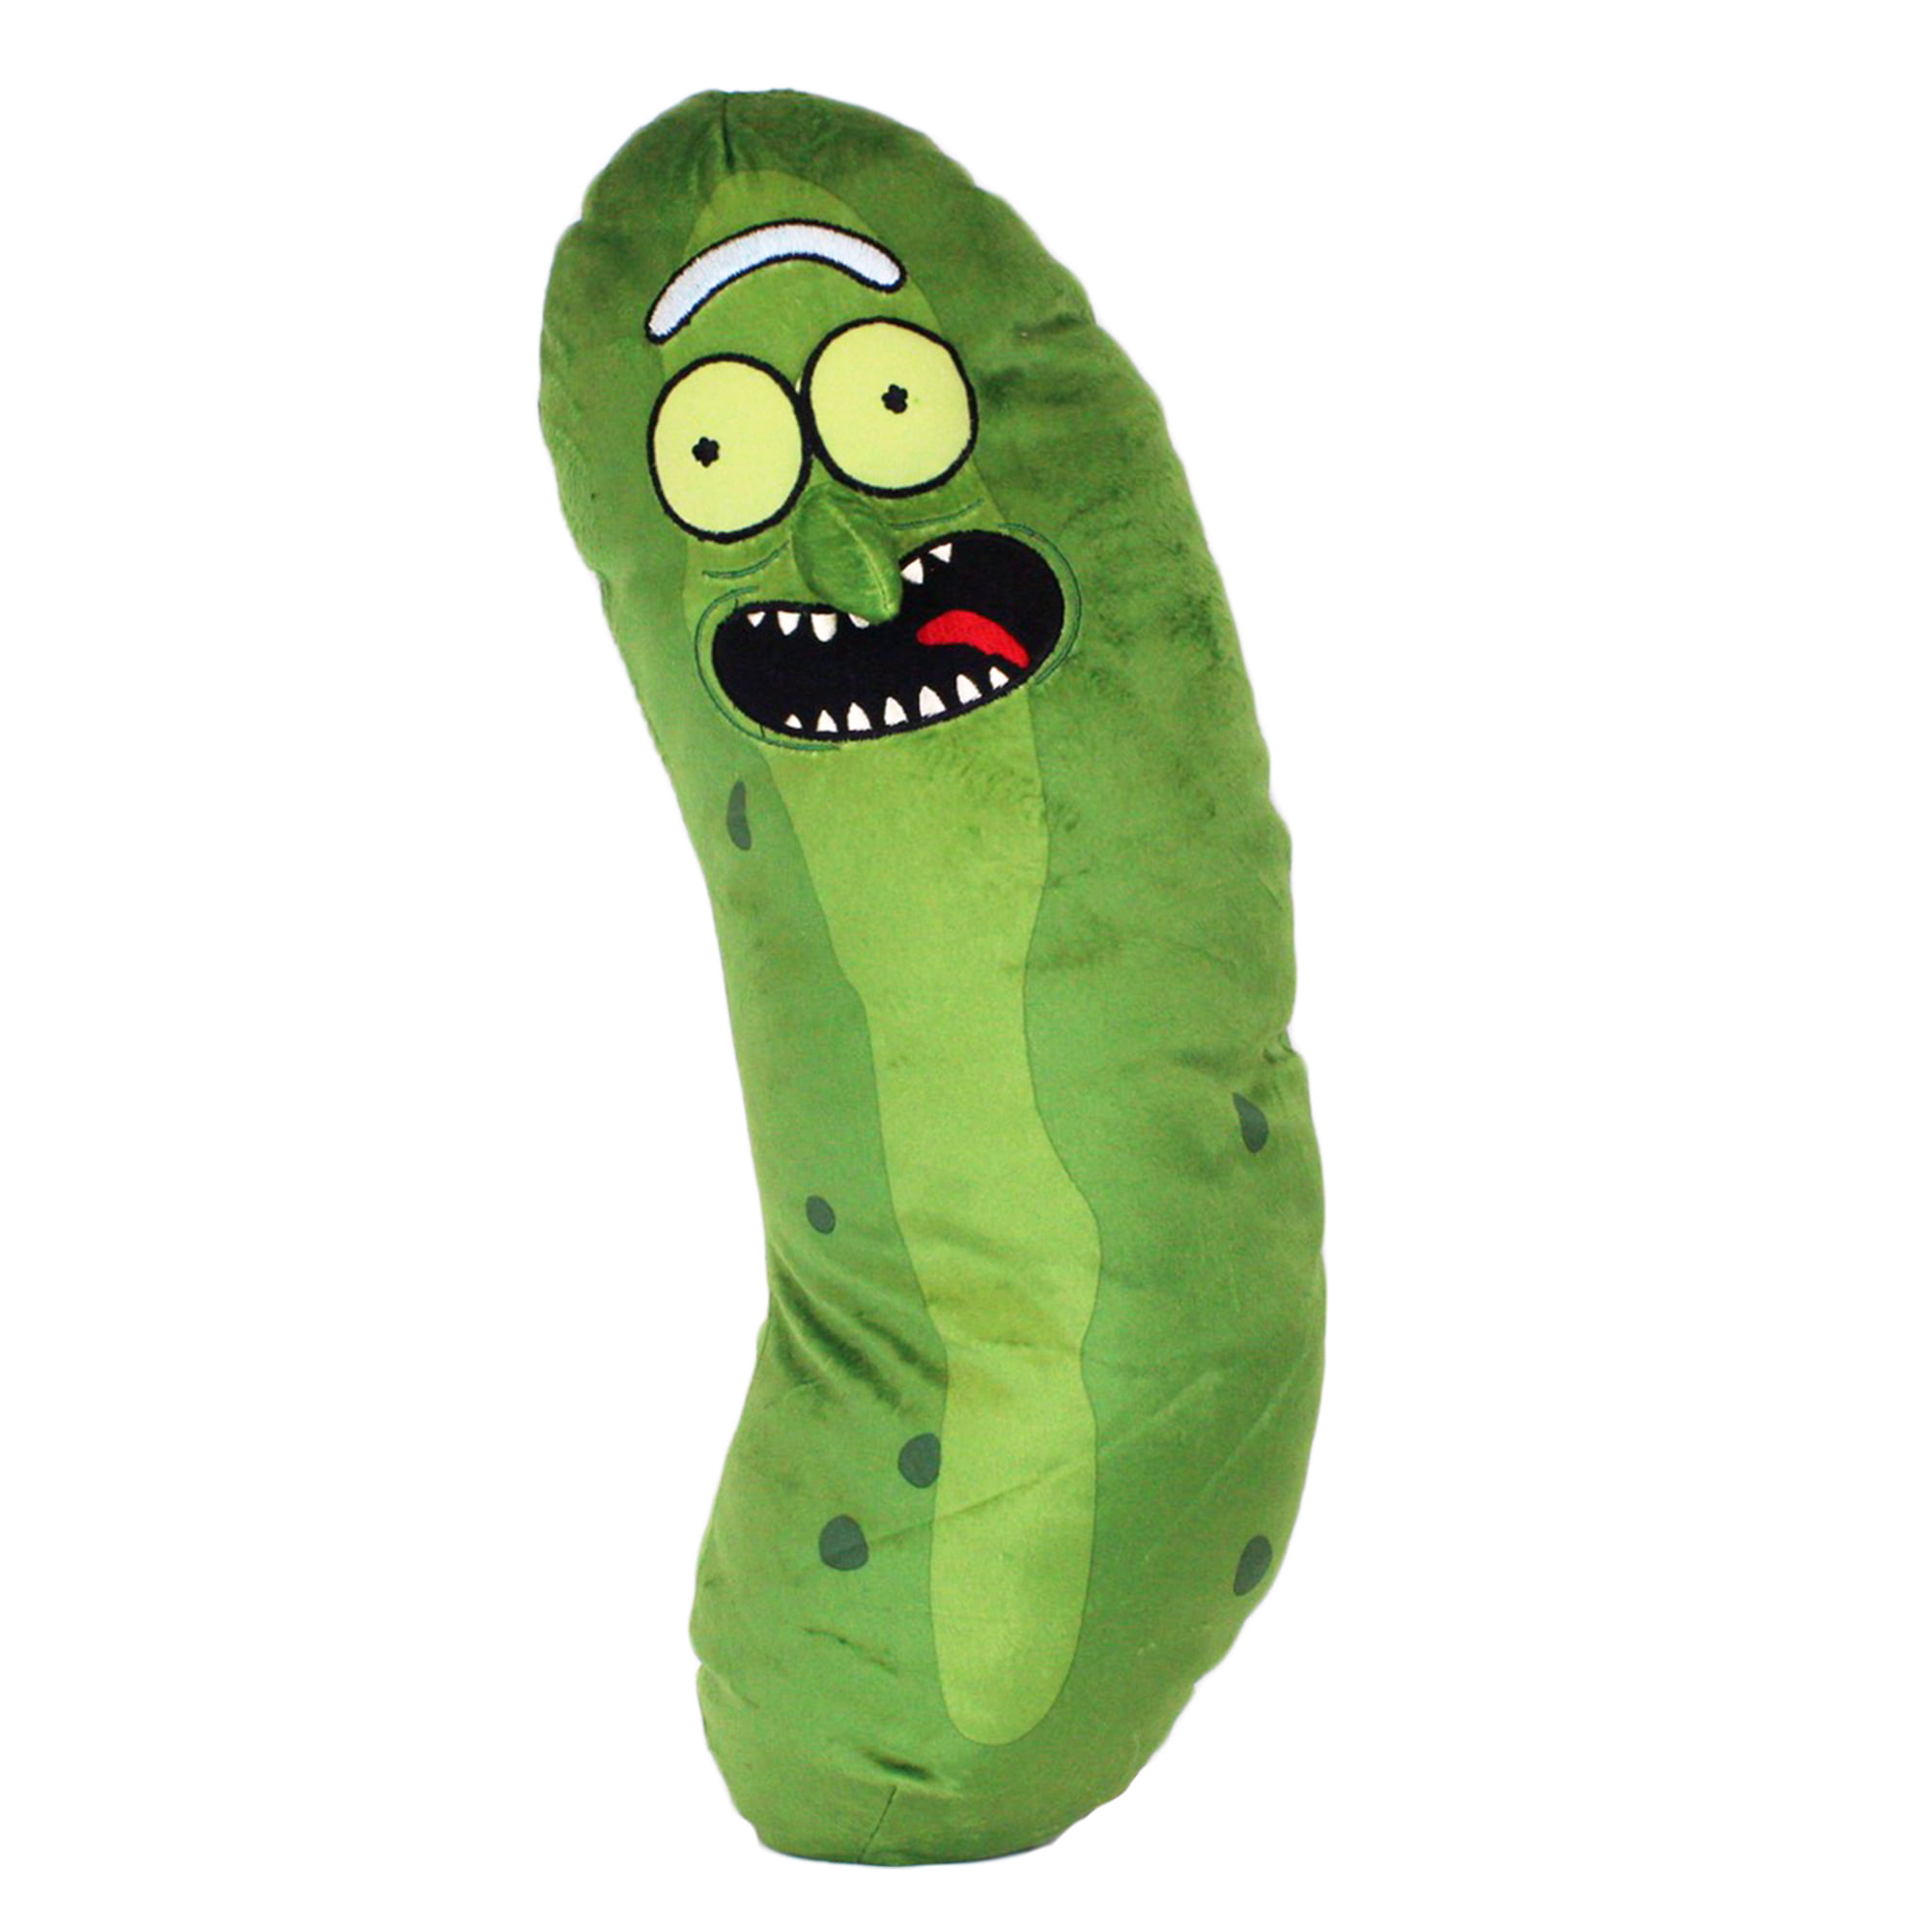 giant stuffed pickle rick